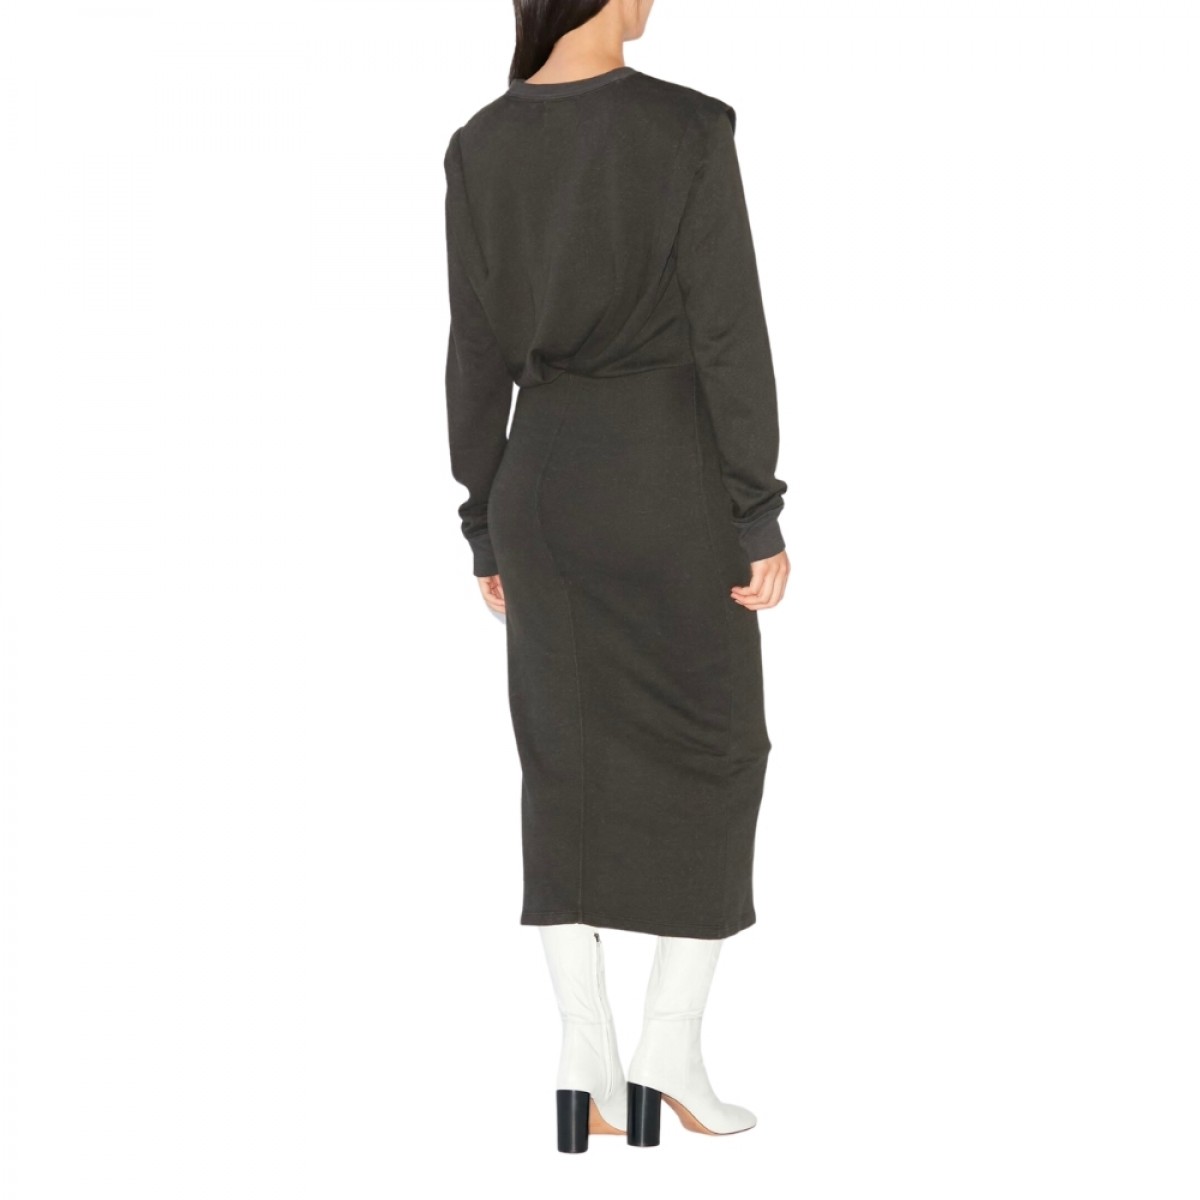 mafalda dress - faded black - ryg